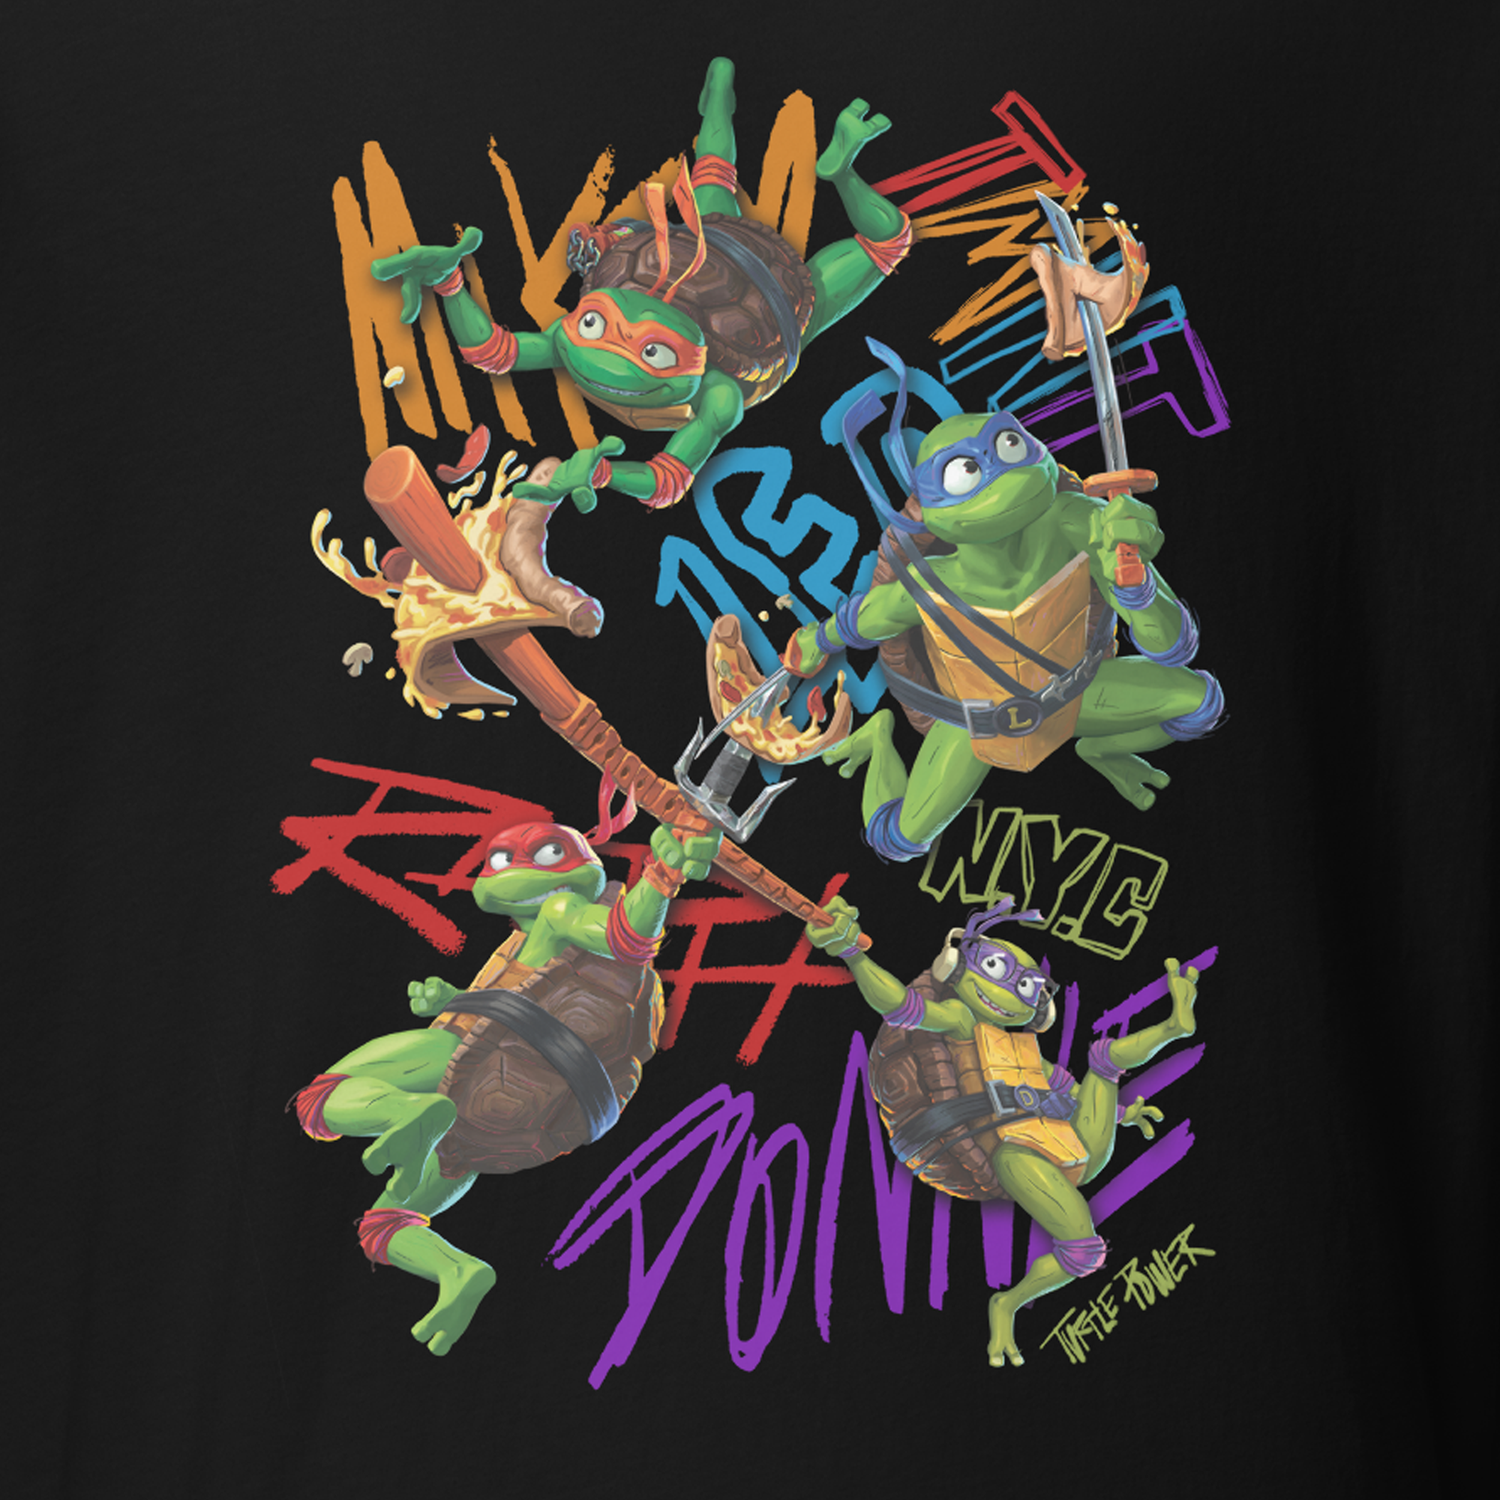 Teenage Mutant Ninja Turtles Pizza Sharing T-Shirt